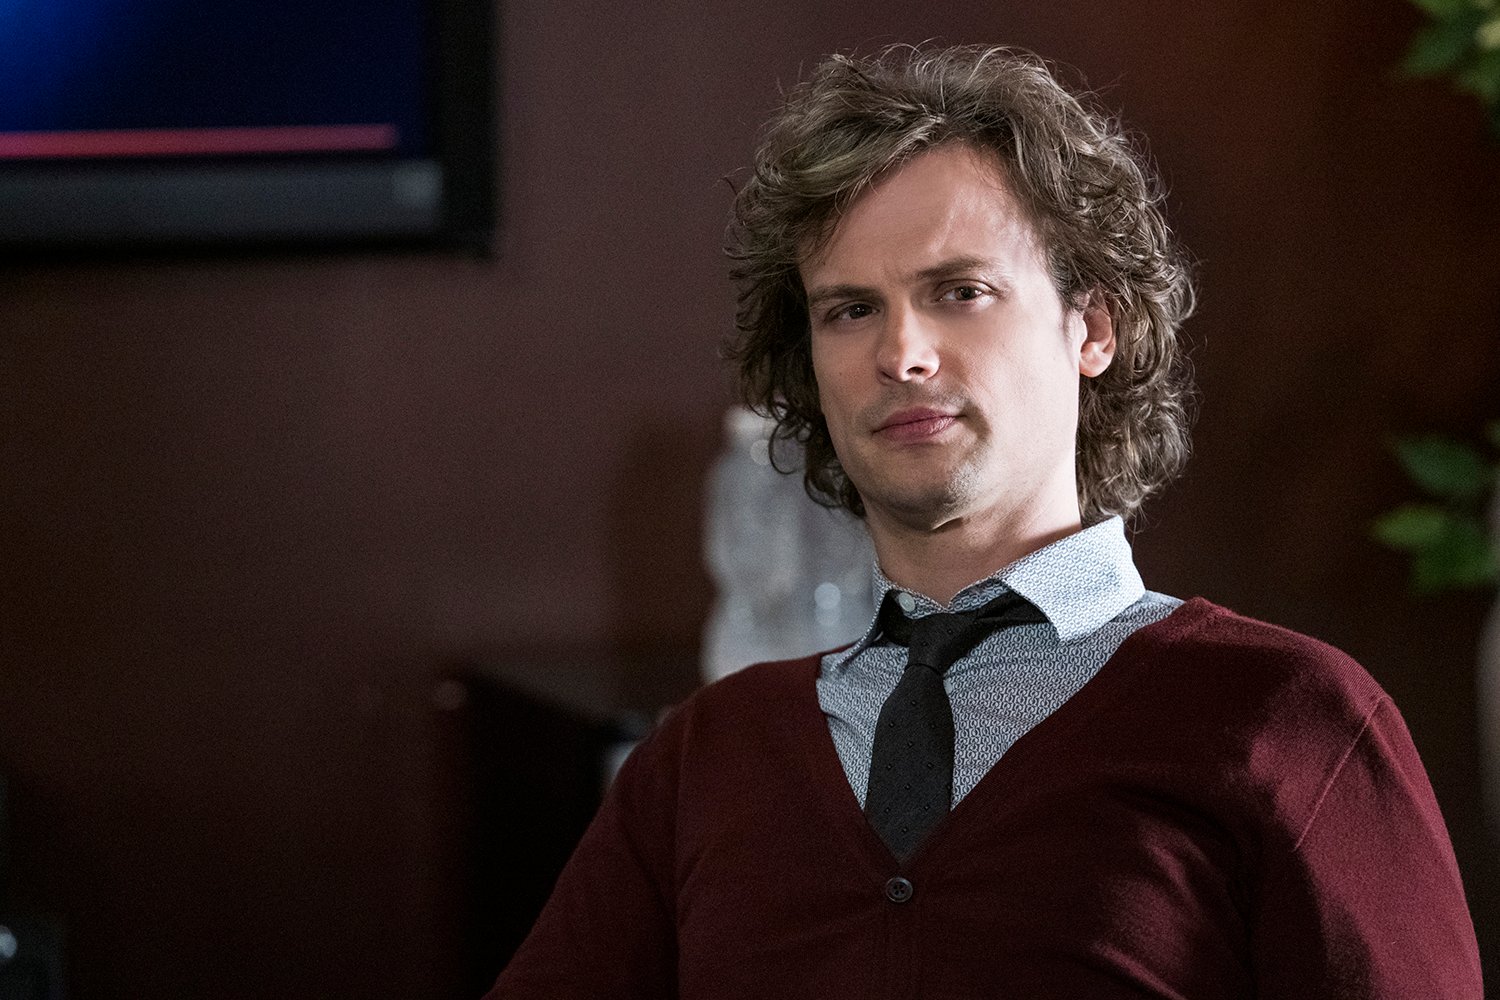 Criminal Minds Season 15: Matthew Gray Gubler as Spencer Reid in a rest vest and tie